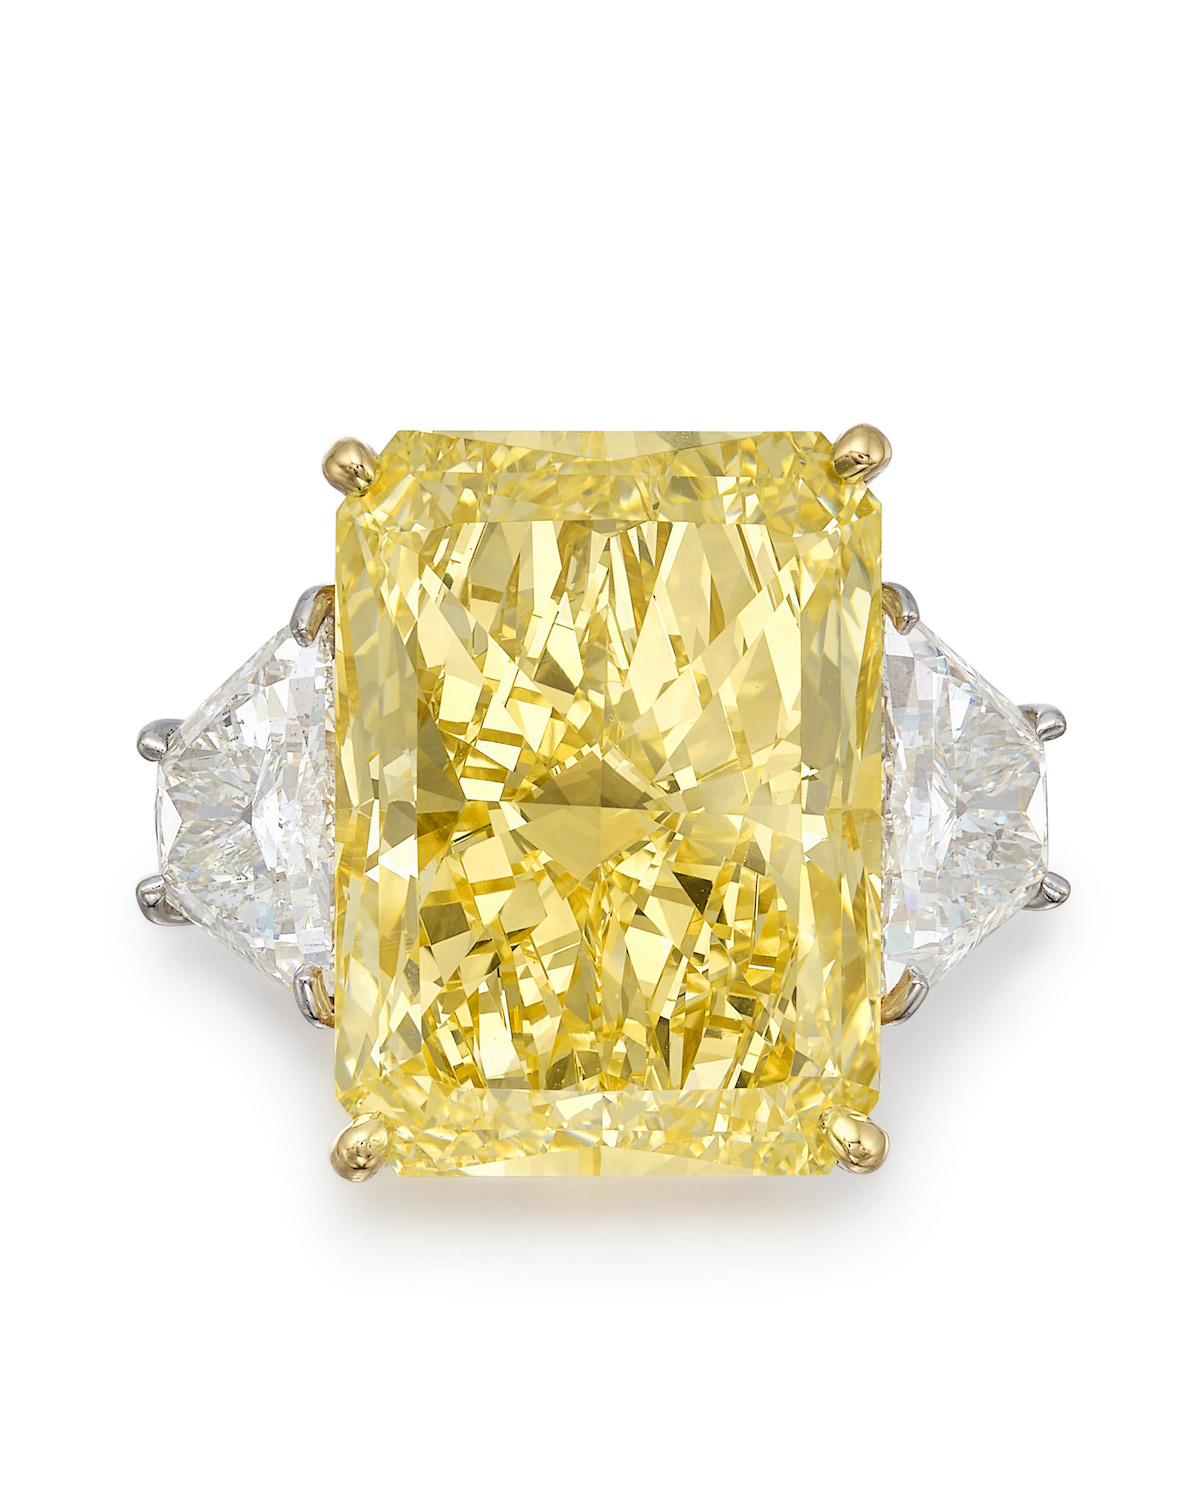 frank everett sotheby's natural diamond auction